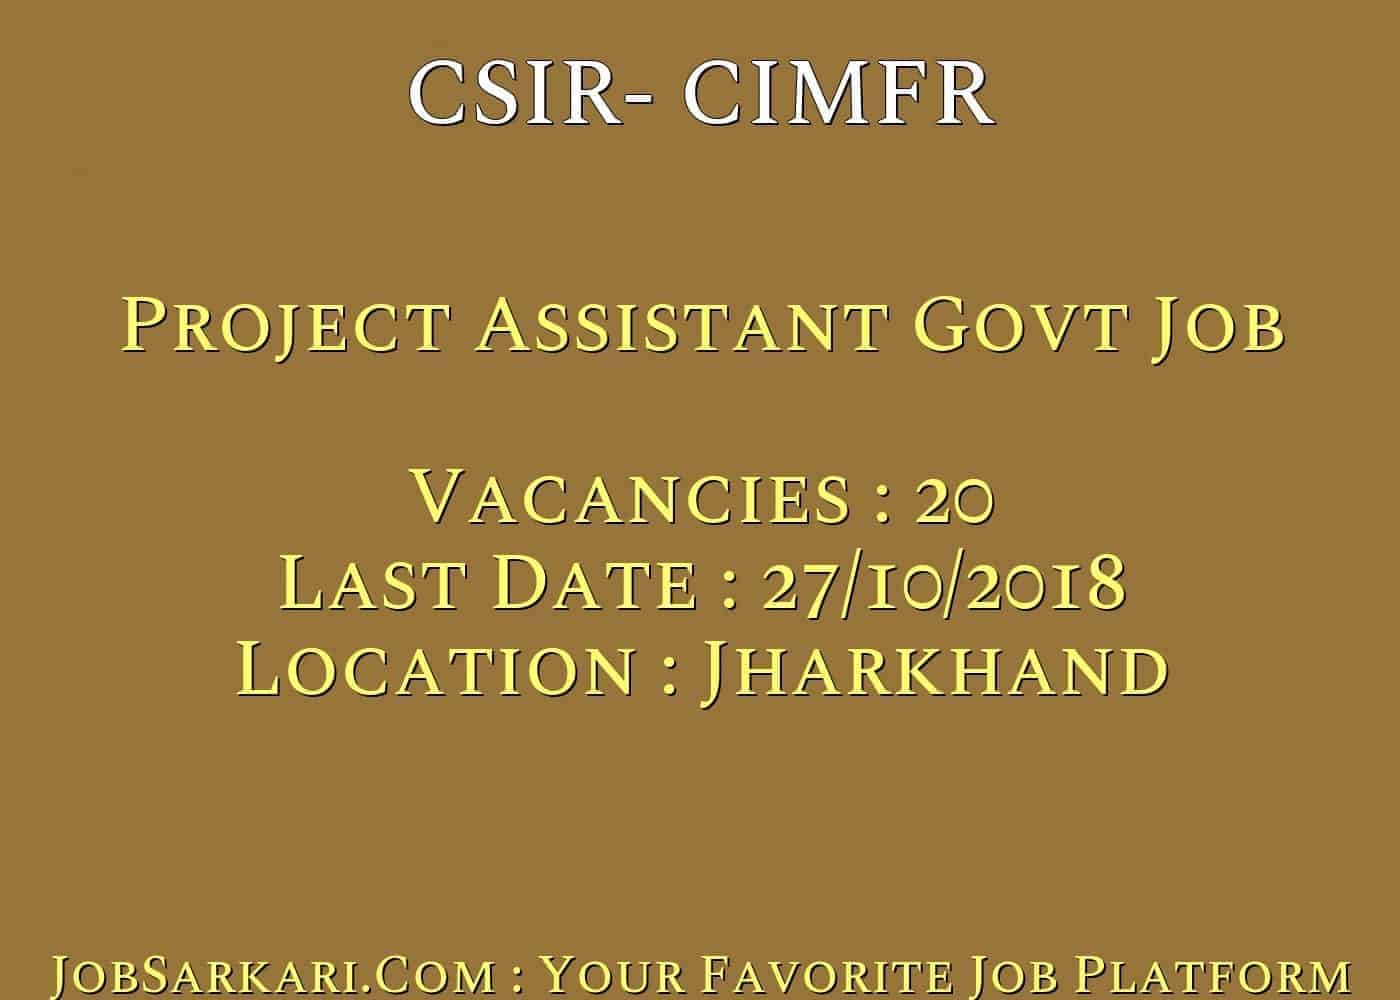 CSIR- CIMFR Recruitment 2018 For Project Assistant Govt Job